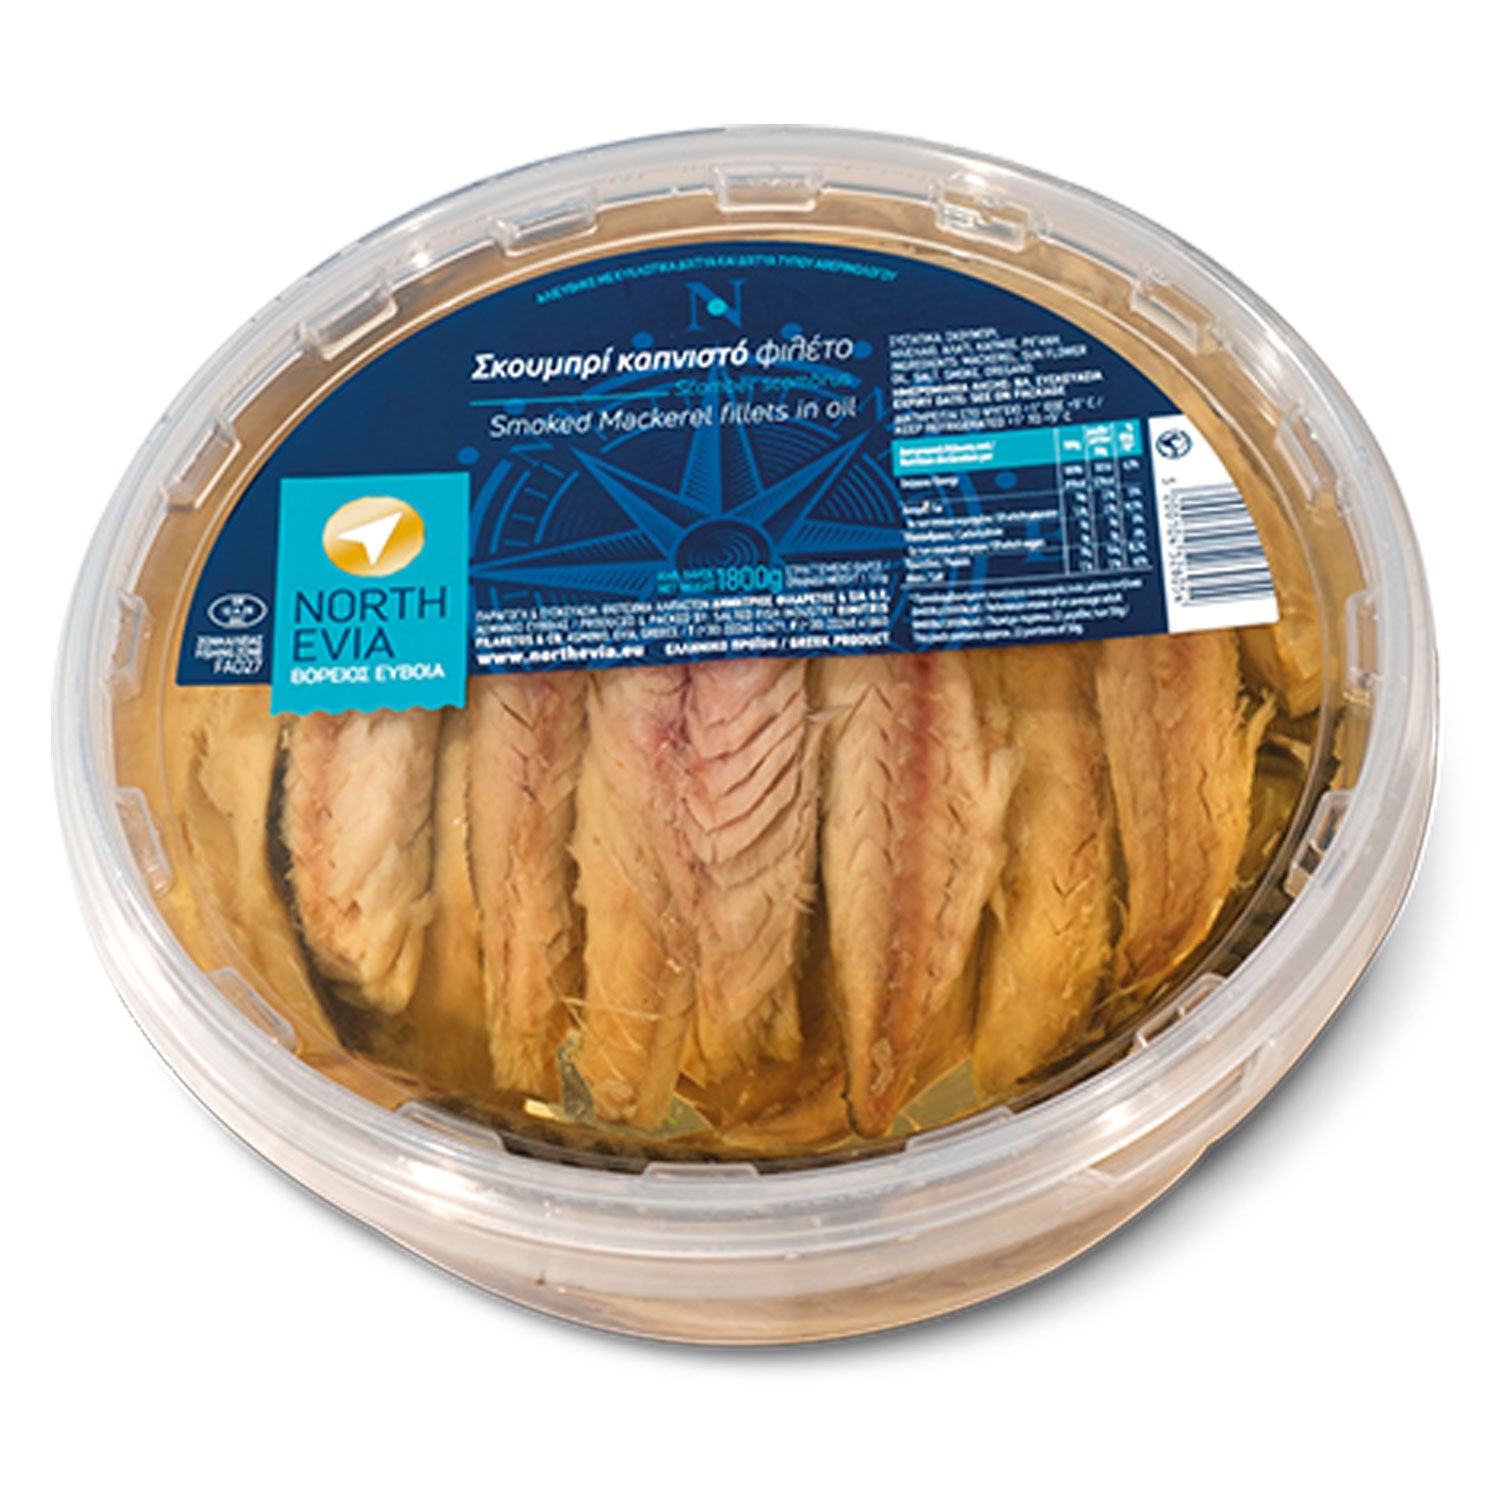 griechische-produkte-geraucherte-makrelenfilets-aus-Euboa-2kg